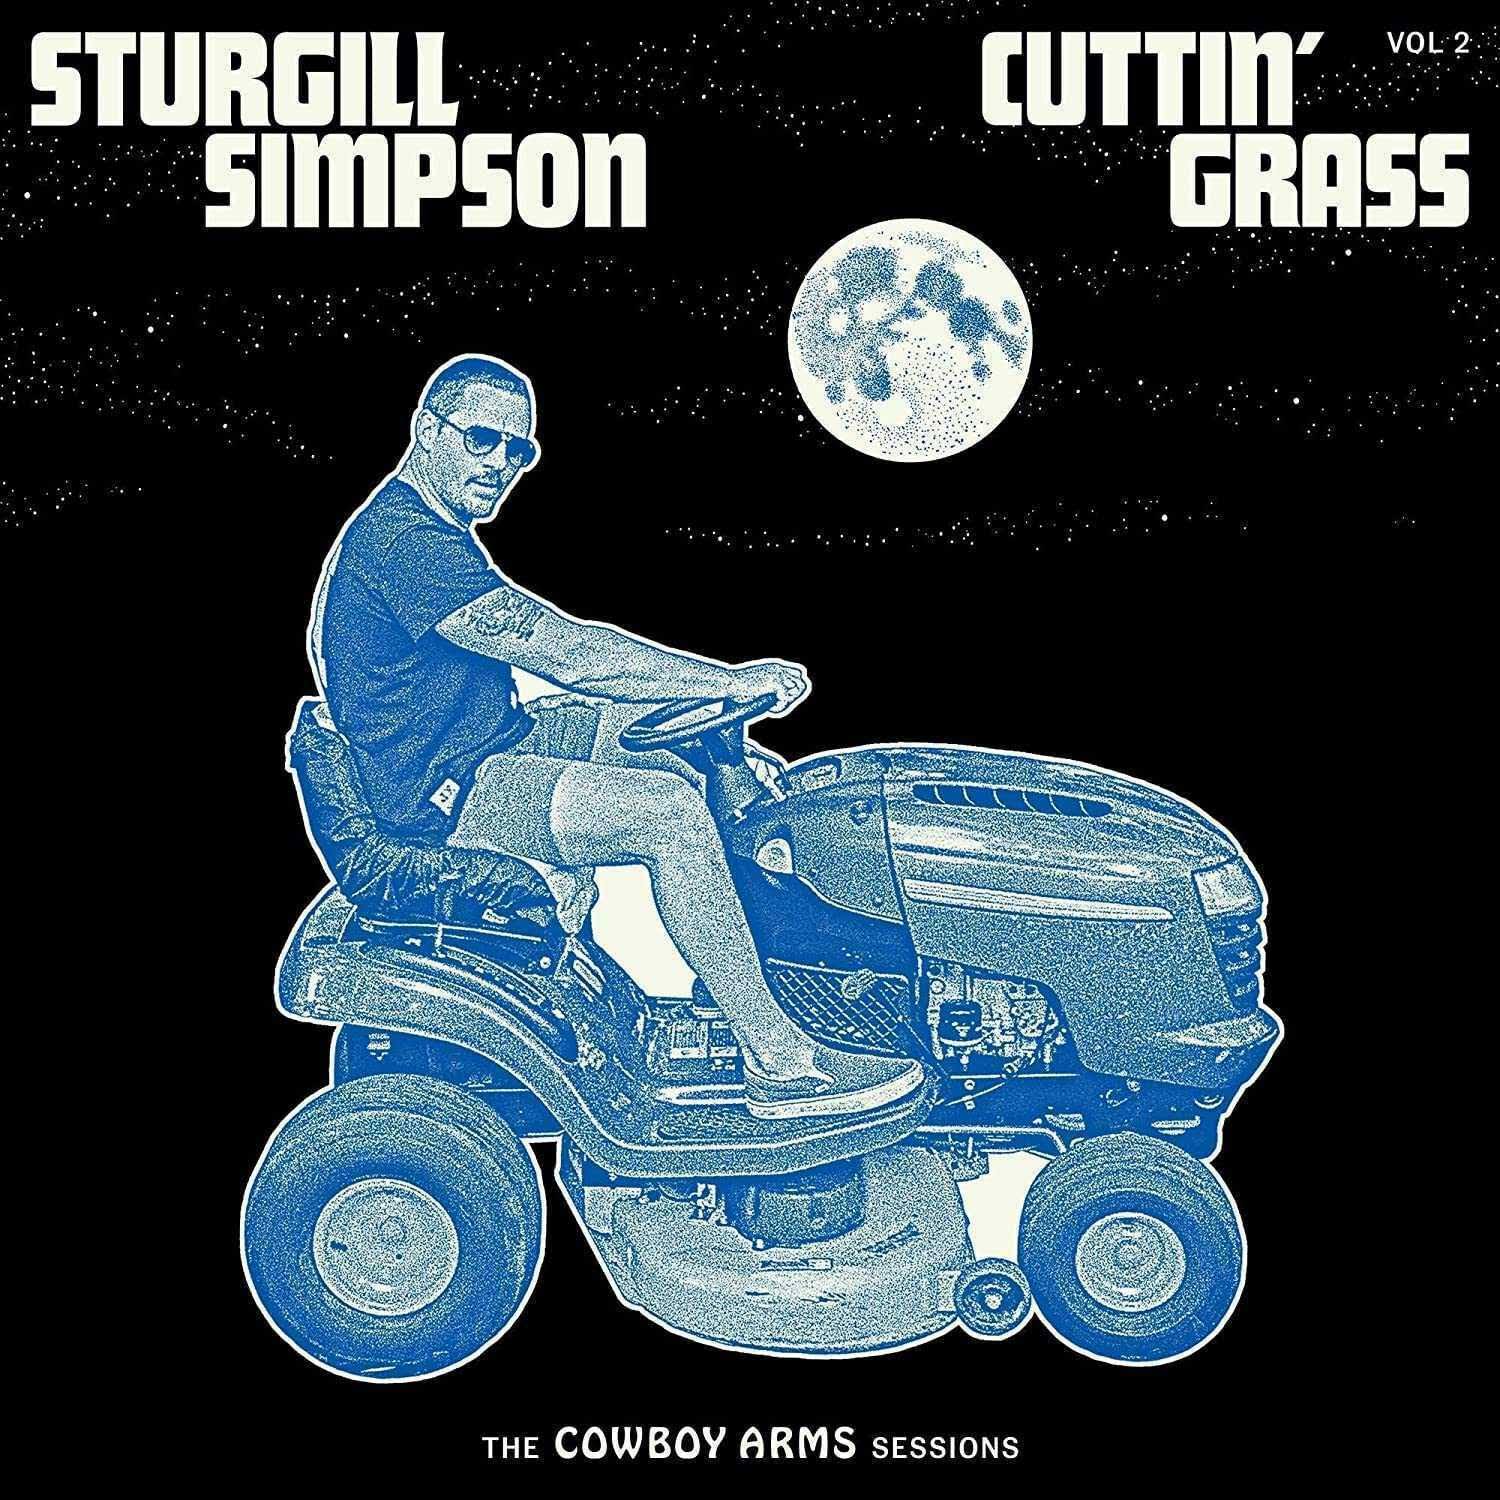 Cuttin' Grass - Vol. 2 (The Cowboy Arms Sessions) - Sturgill Simpson - Vinyl